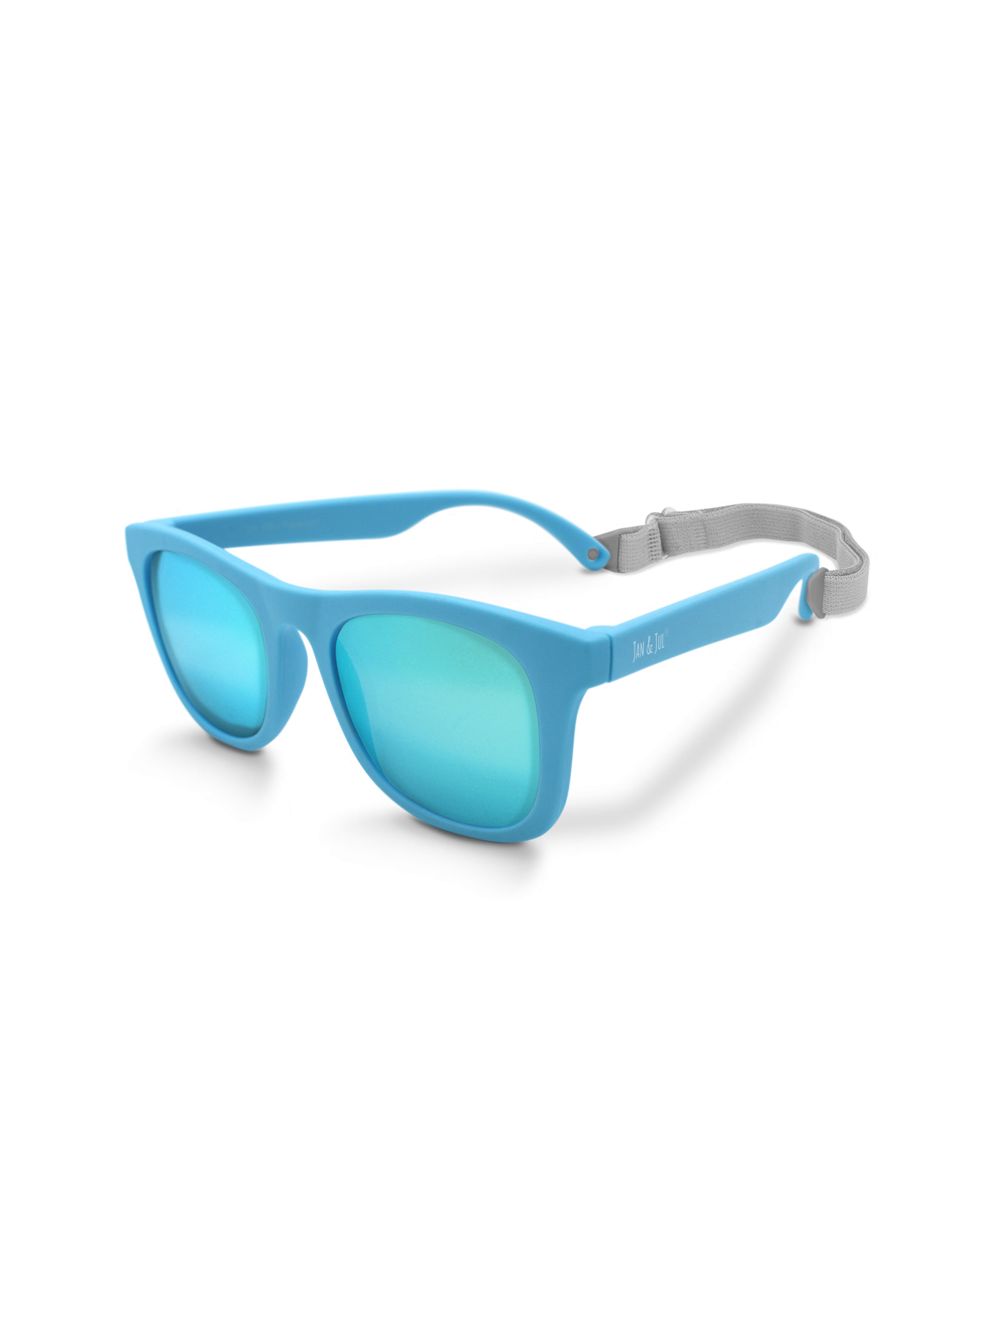 Jan & Jul Urban Xplorer Kids Sunglasses - Sky Blue Aurora - 2Y-6Y - Medium